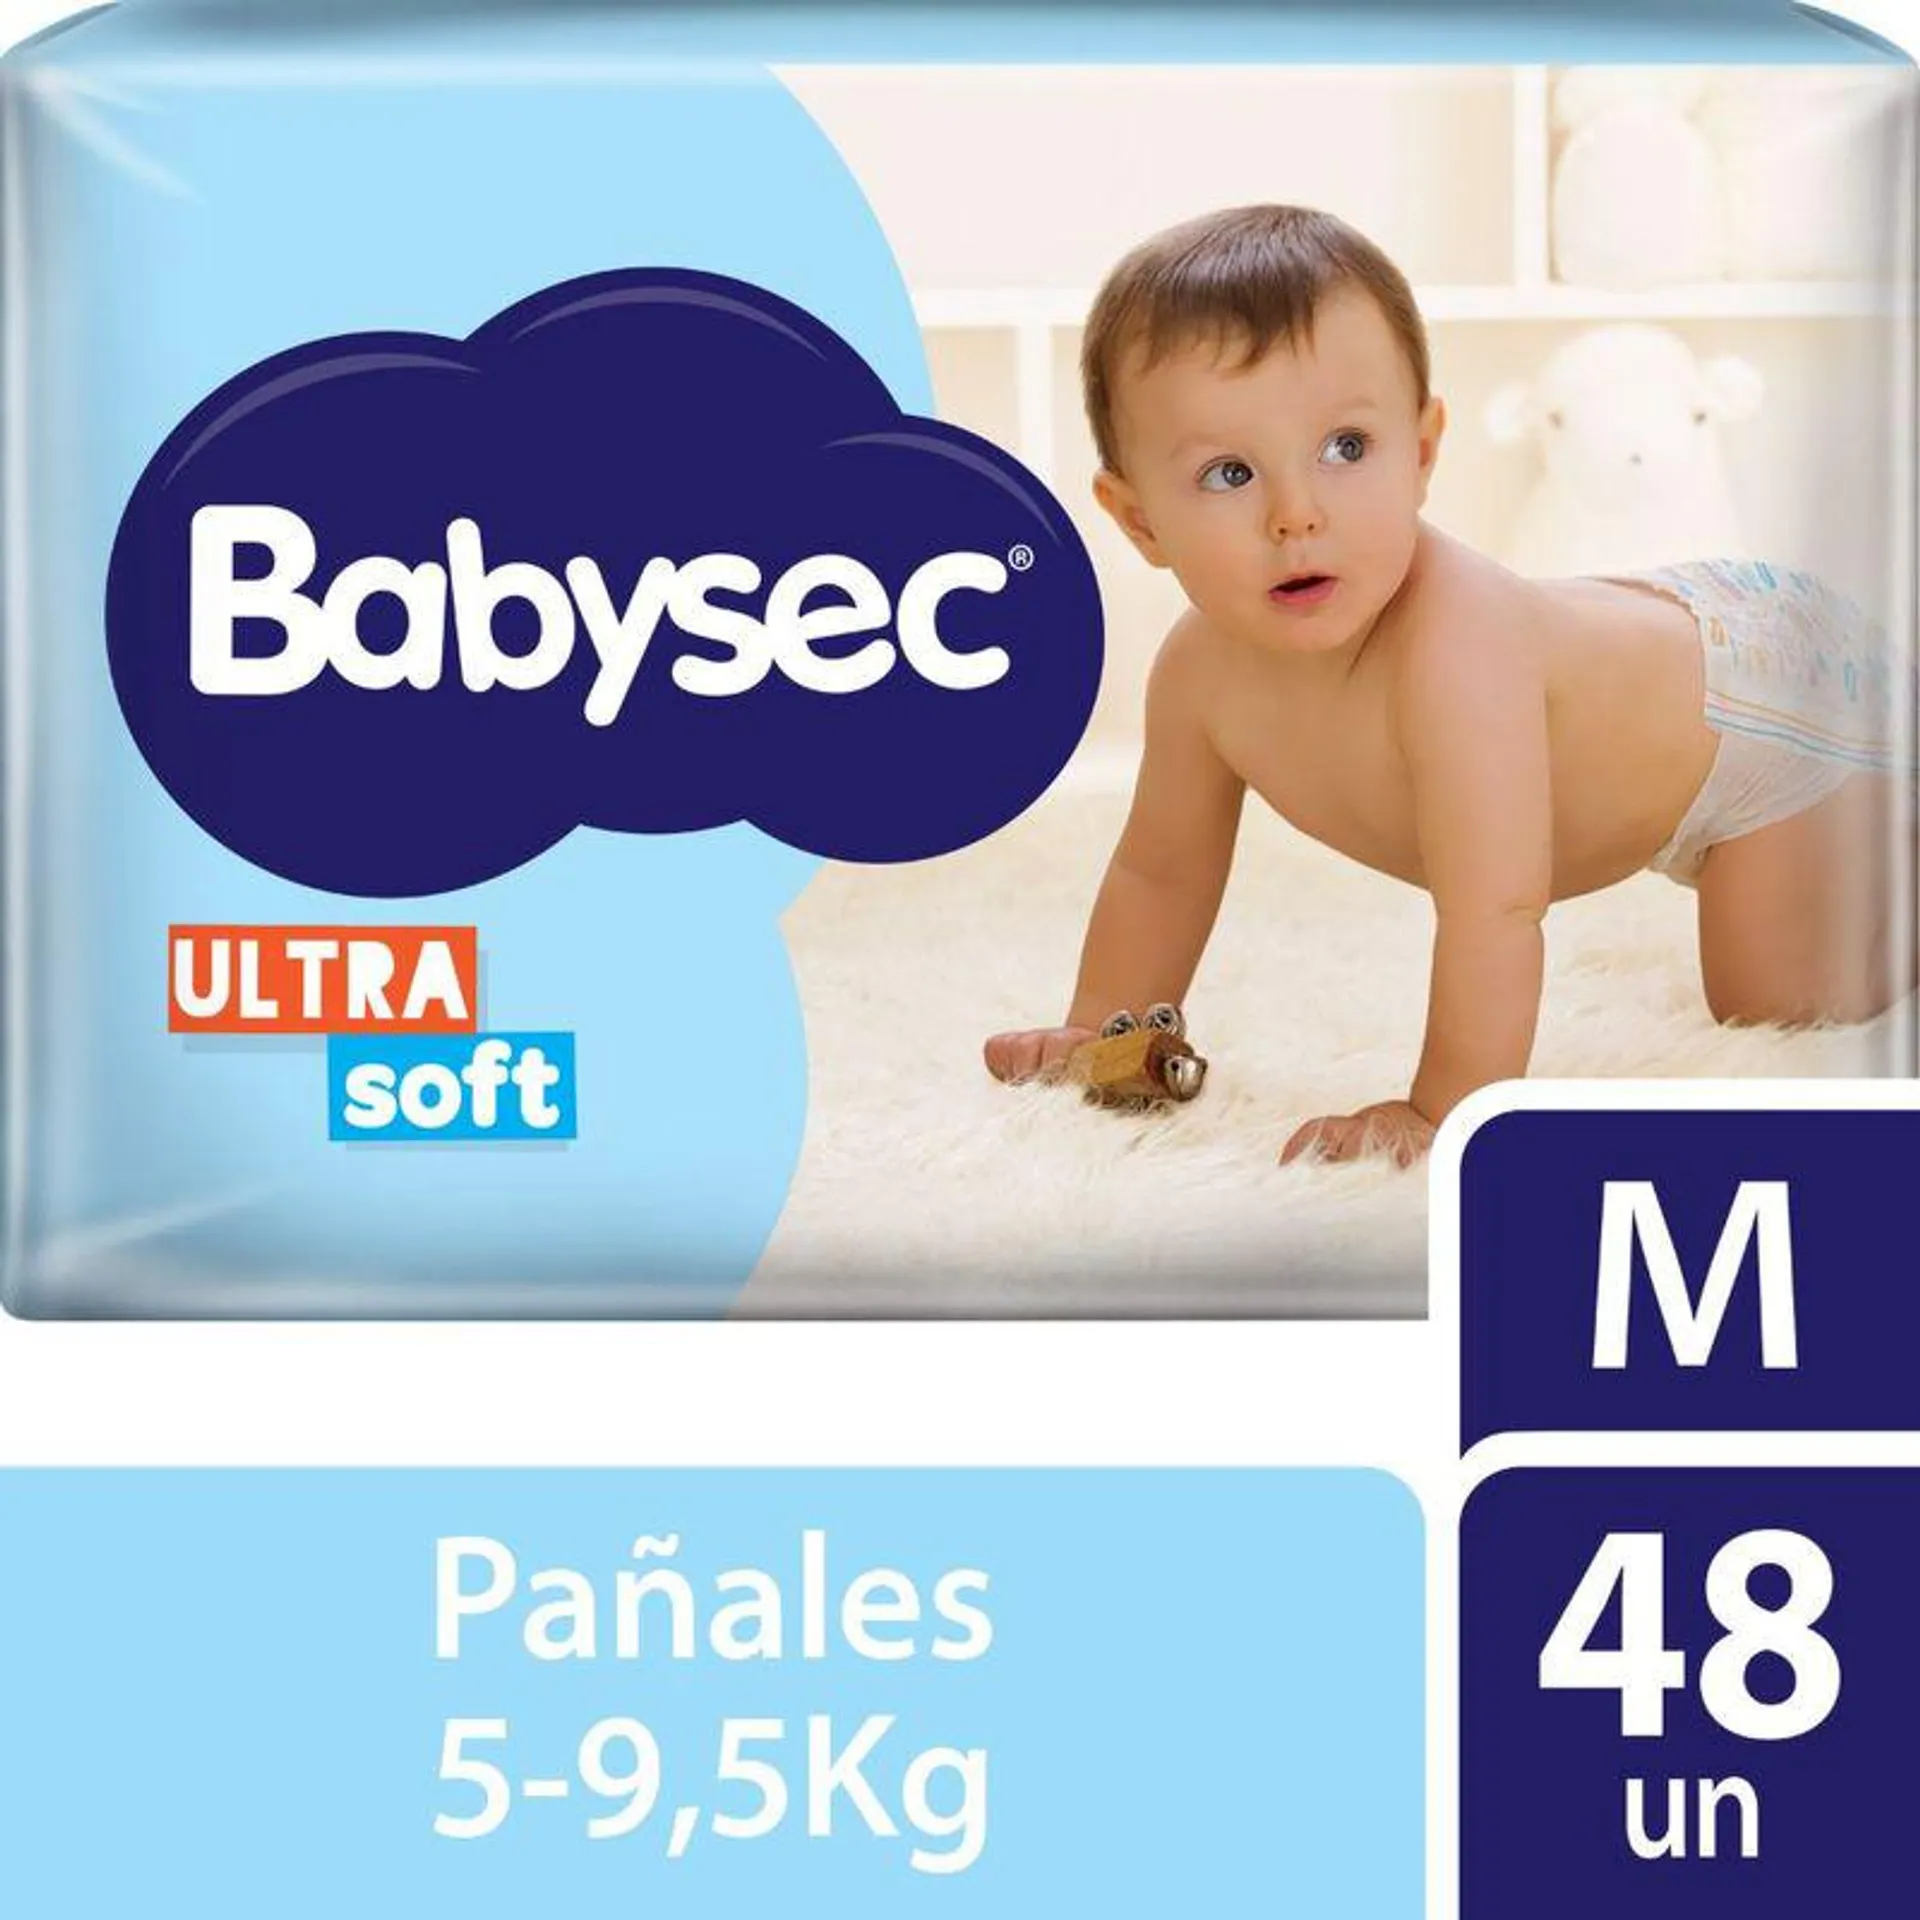 Pañales Babysec Ultrasoft talle M x 48 Ud.